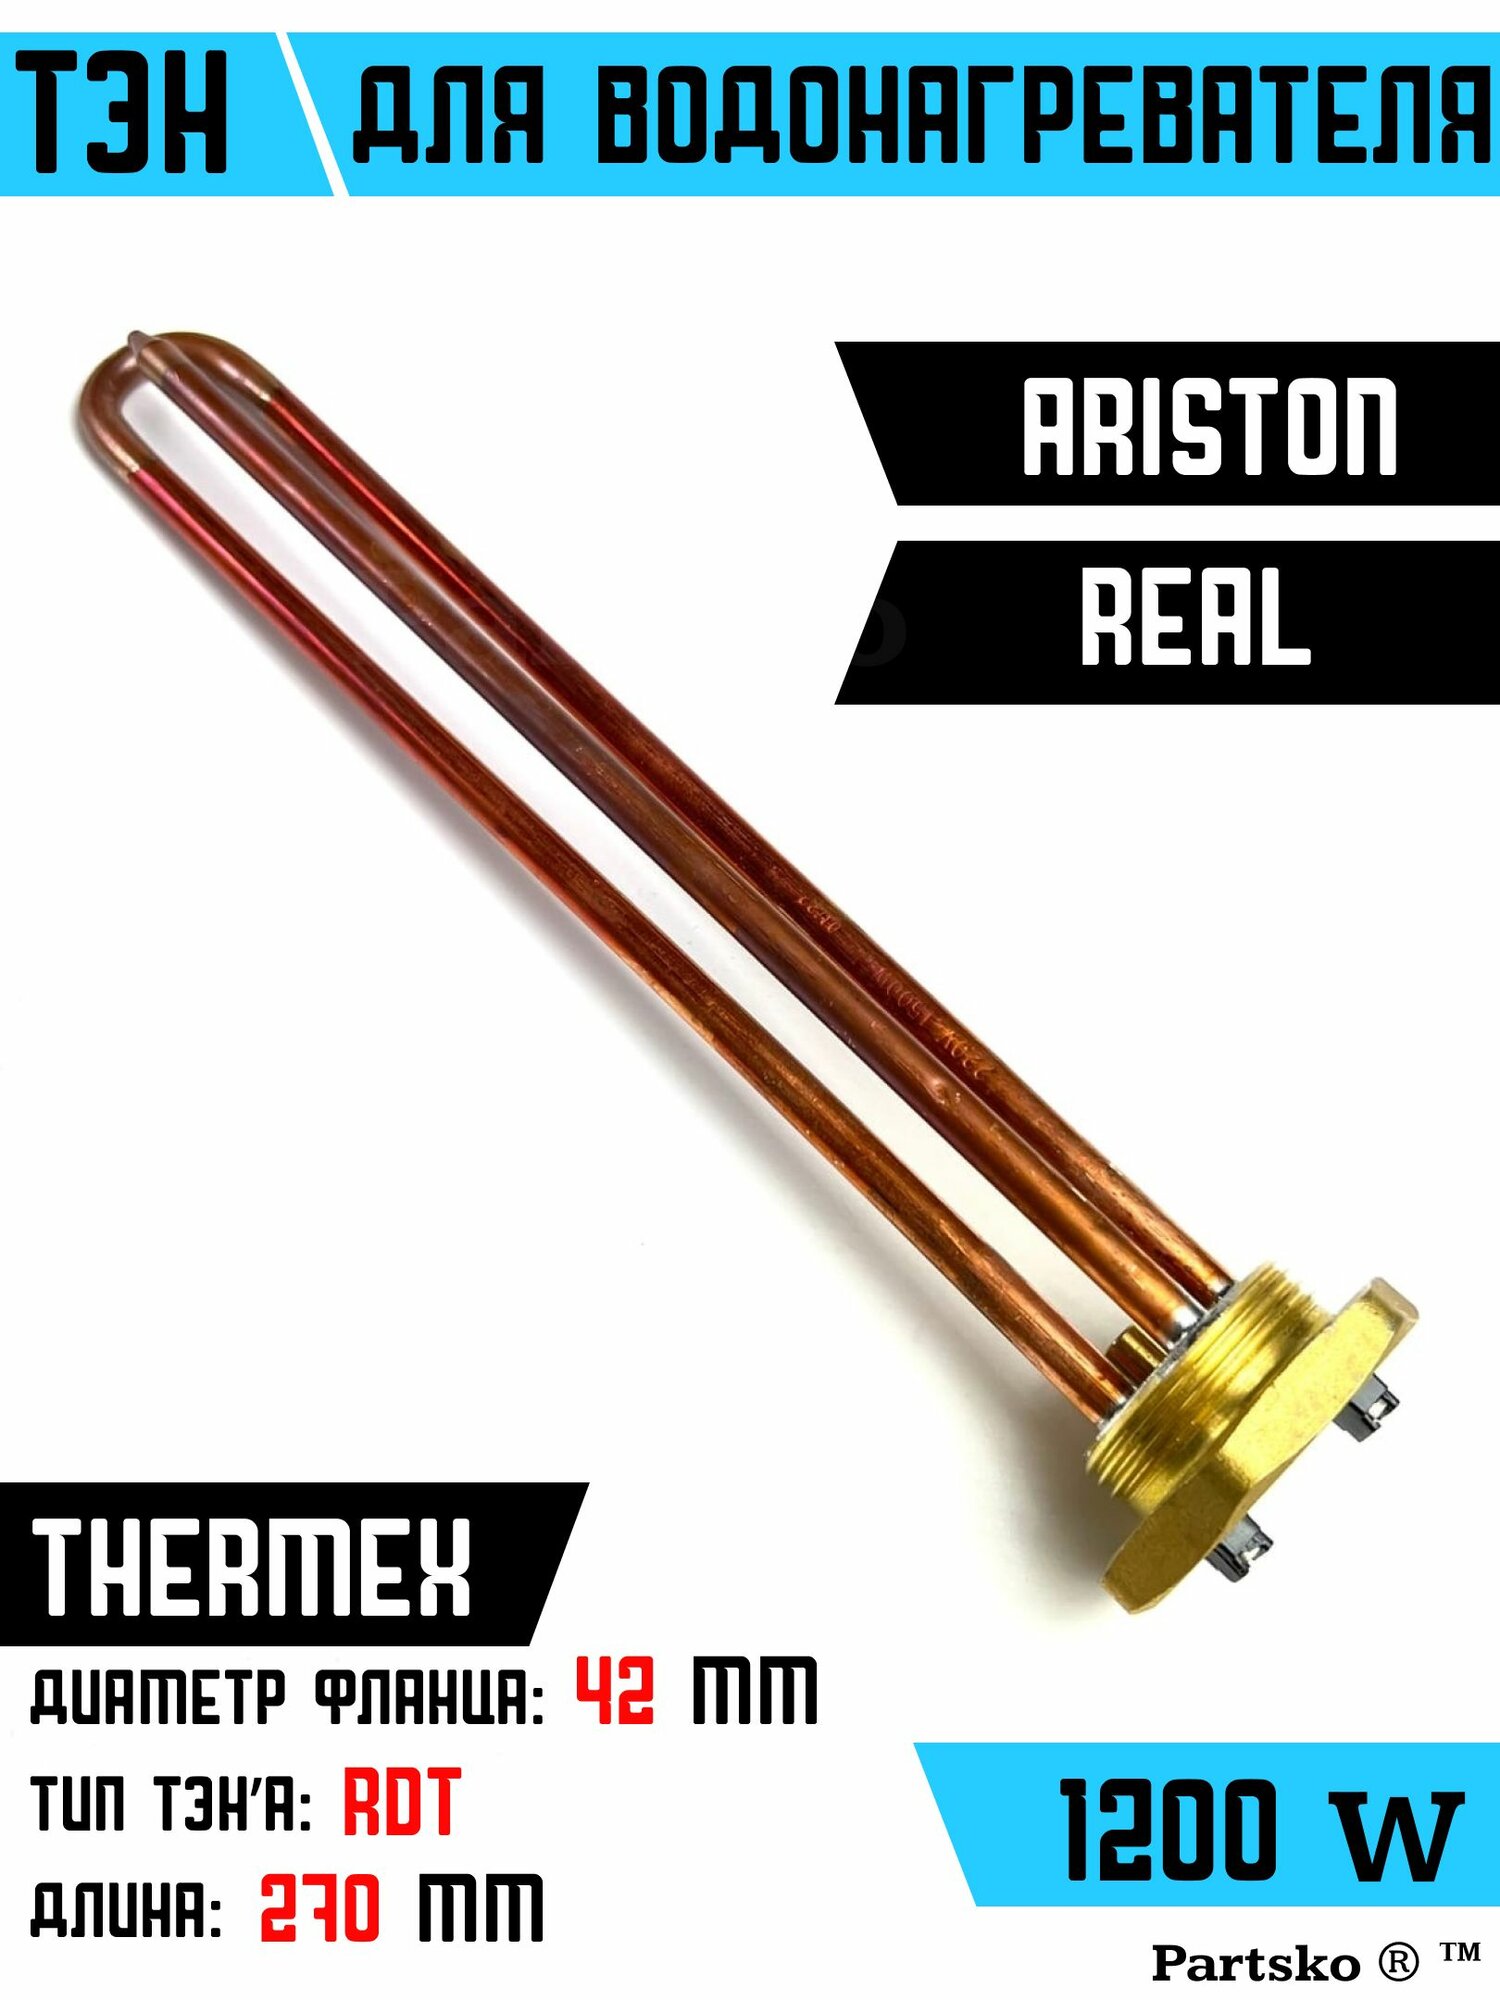 ТЭН для водонагревателя Thermex Ariston, Real. 1200W, L270мм, металл. Для котла отопления бойлеров самогонных аппаратов. Для Термекс Аристон Реал